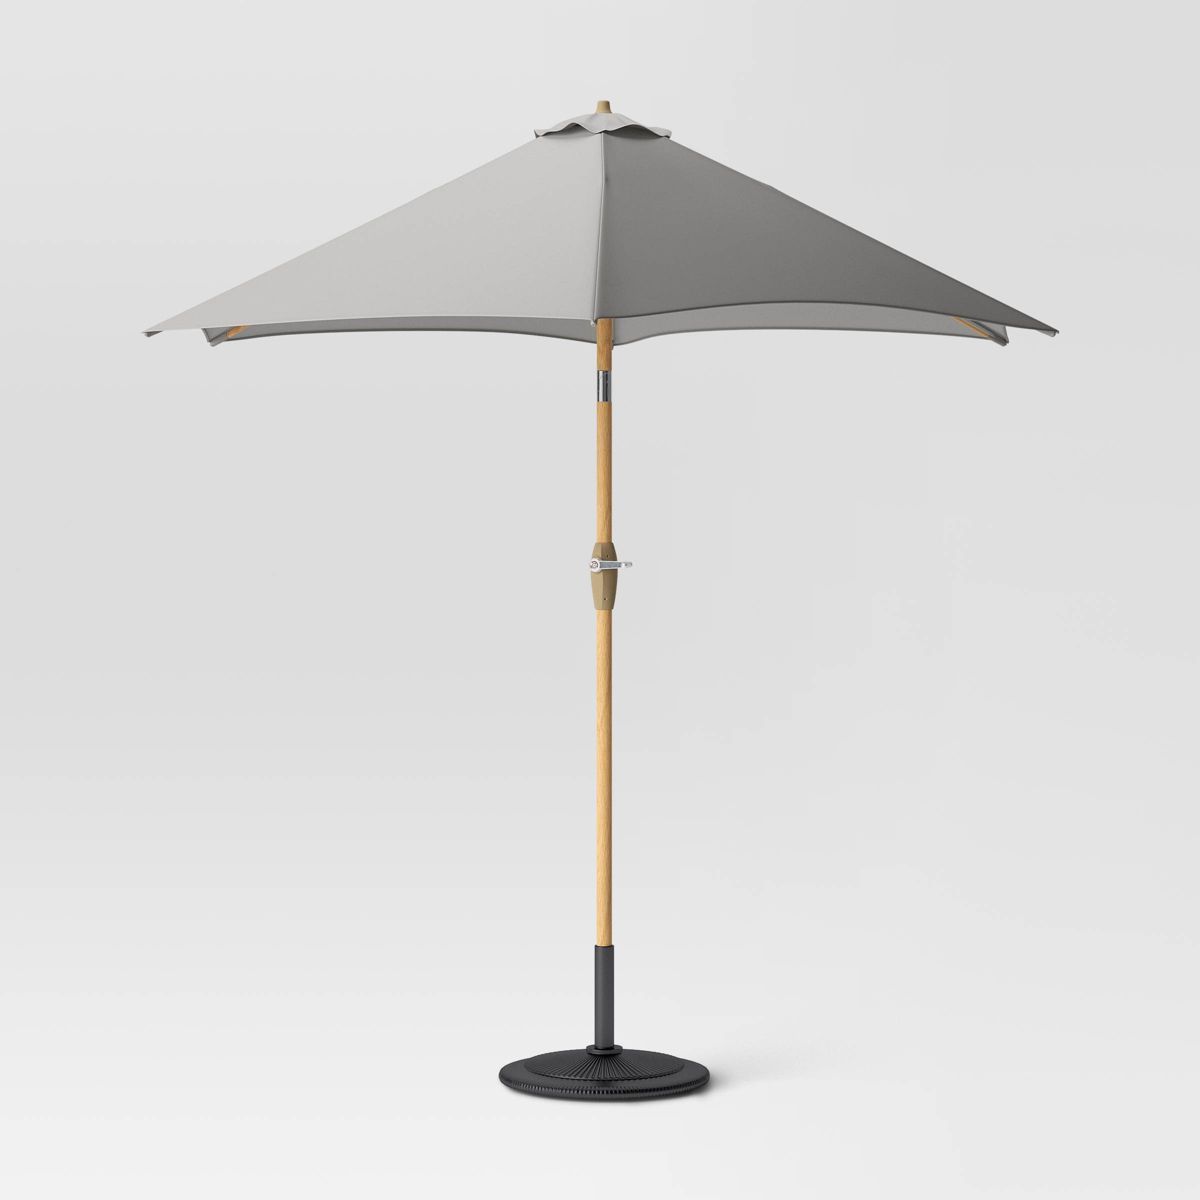 9' Round Outdoor Patio Market Umbrella with Light Wood Pole - Threshold™ | Target